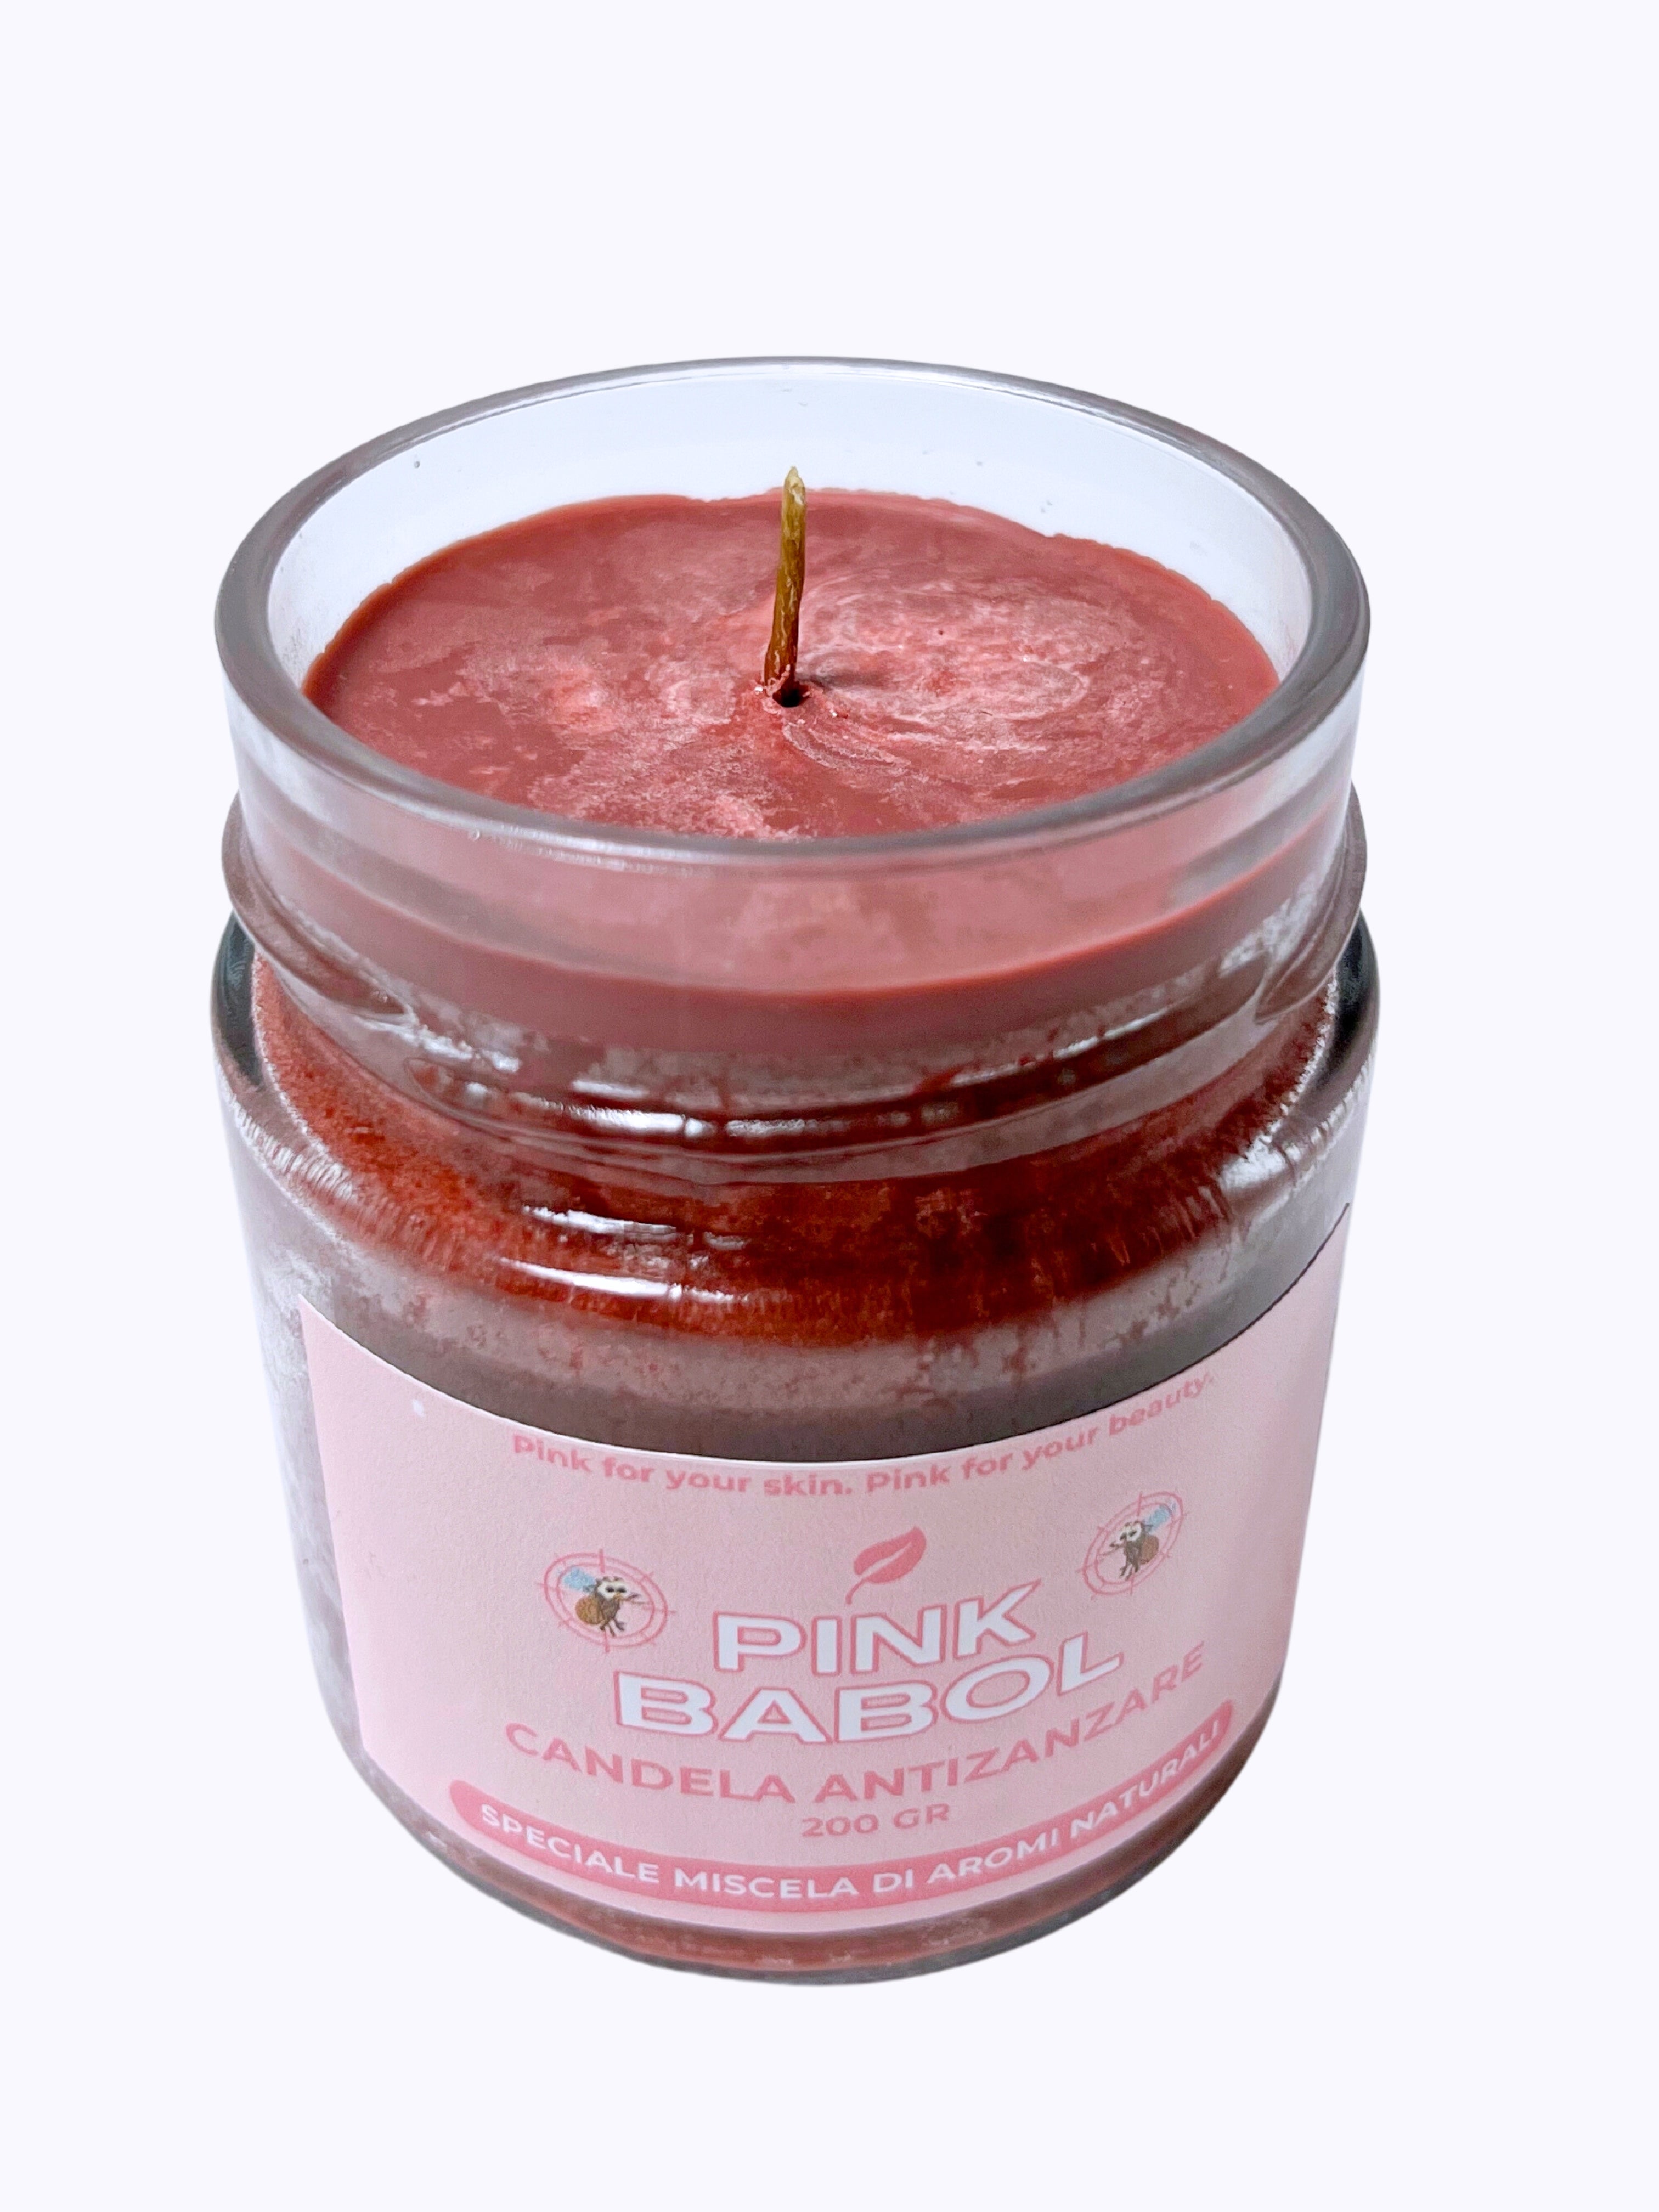 Candela anti zanzare - Speciale miscela di aromi naturali-Pink Babol